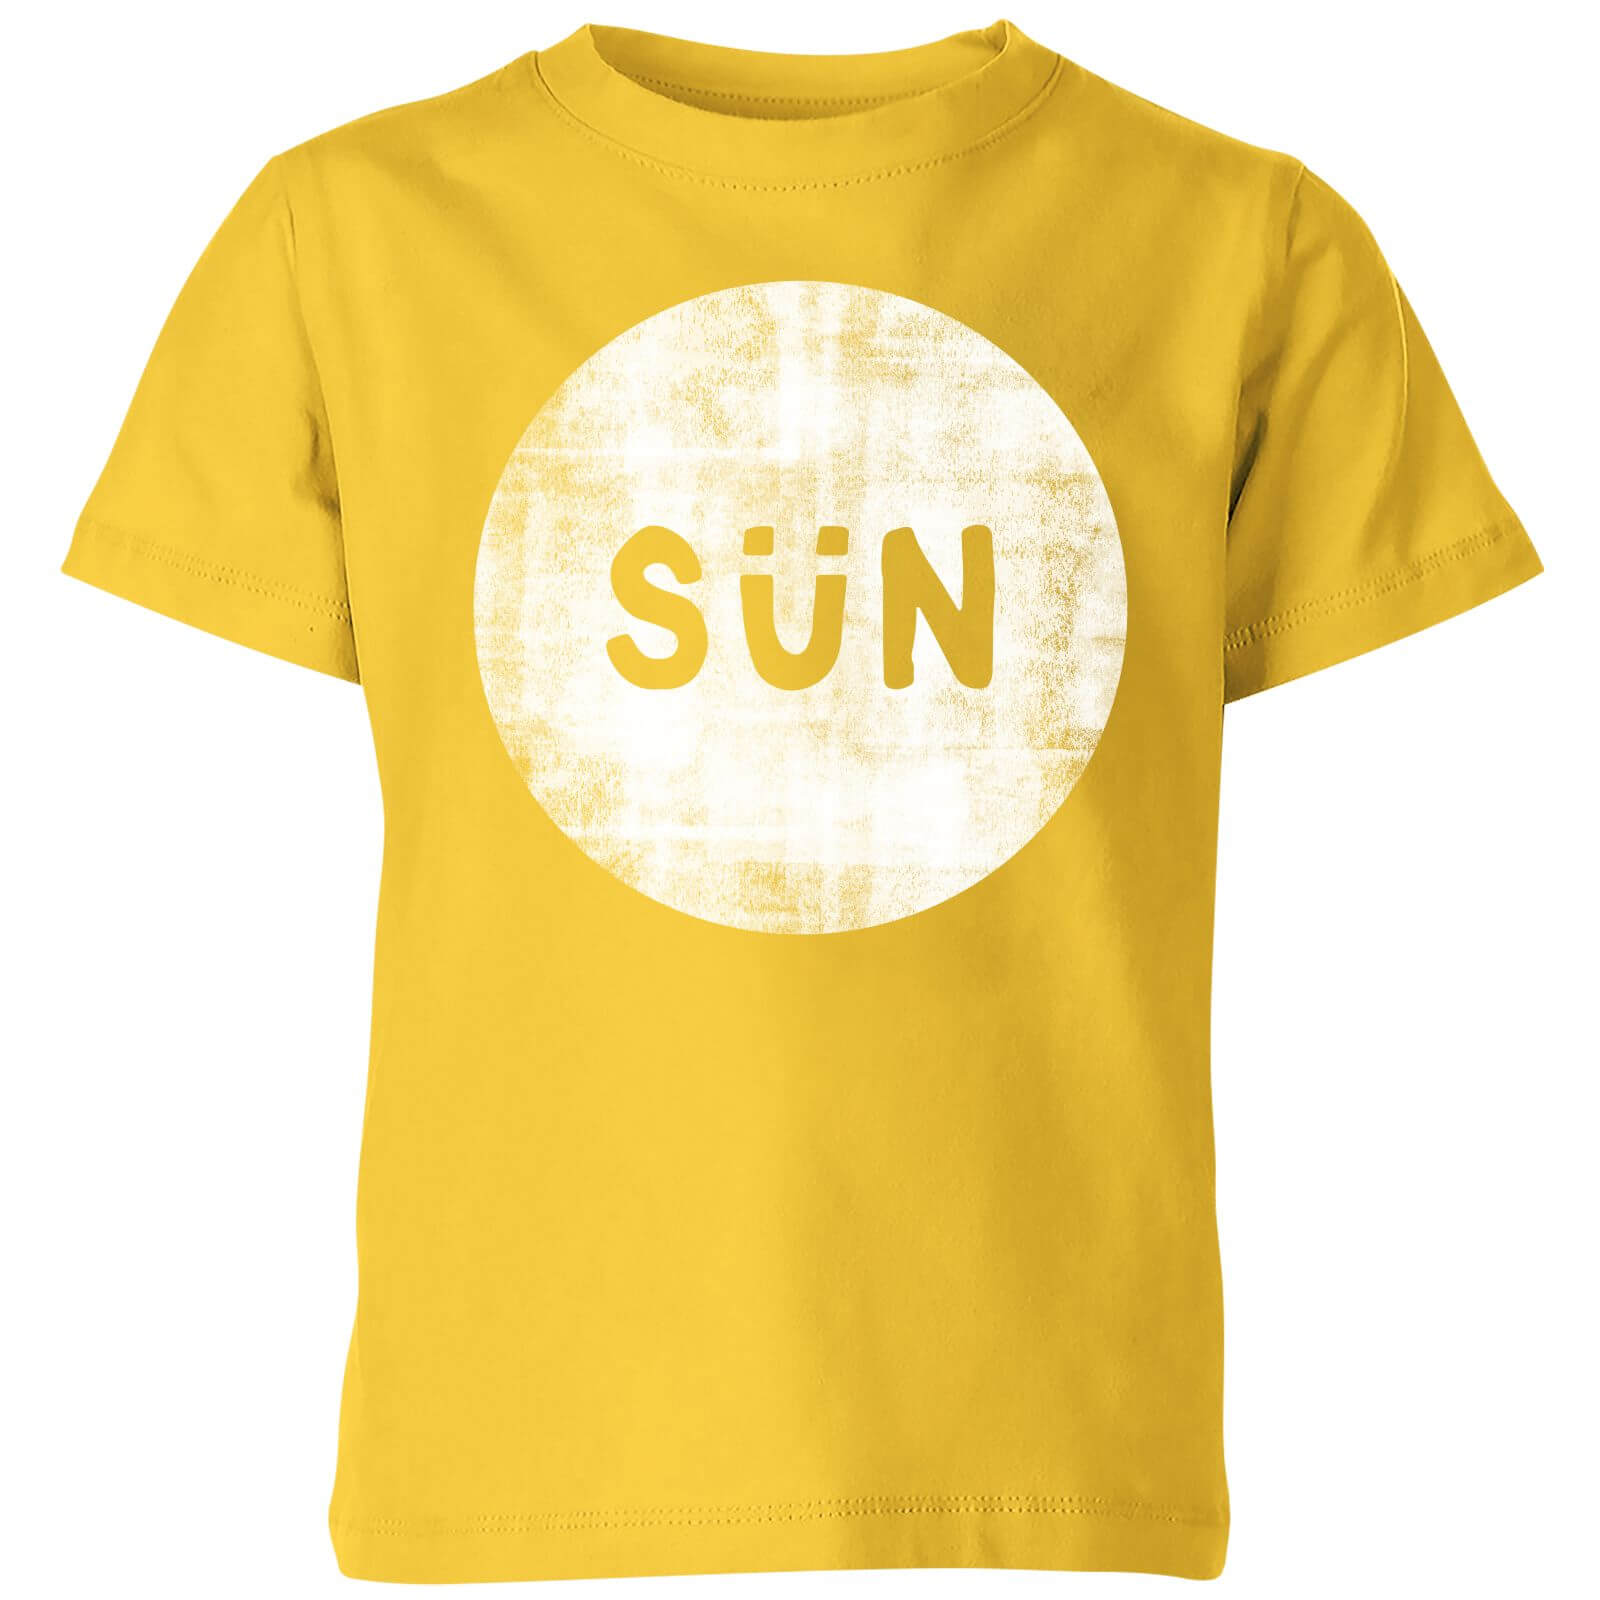 My Little Rascal Sun Kids' T-Shirt - Yellow - 3-4 Years - Yellow